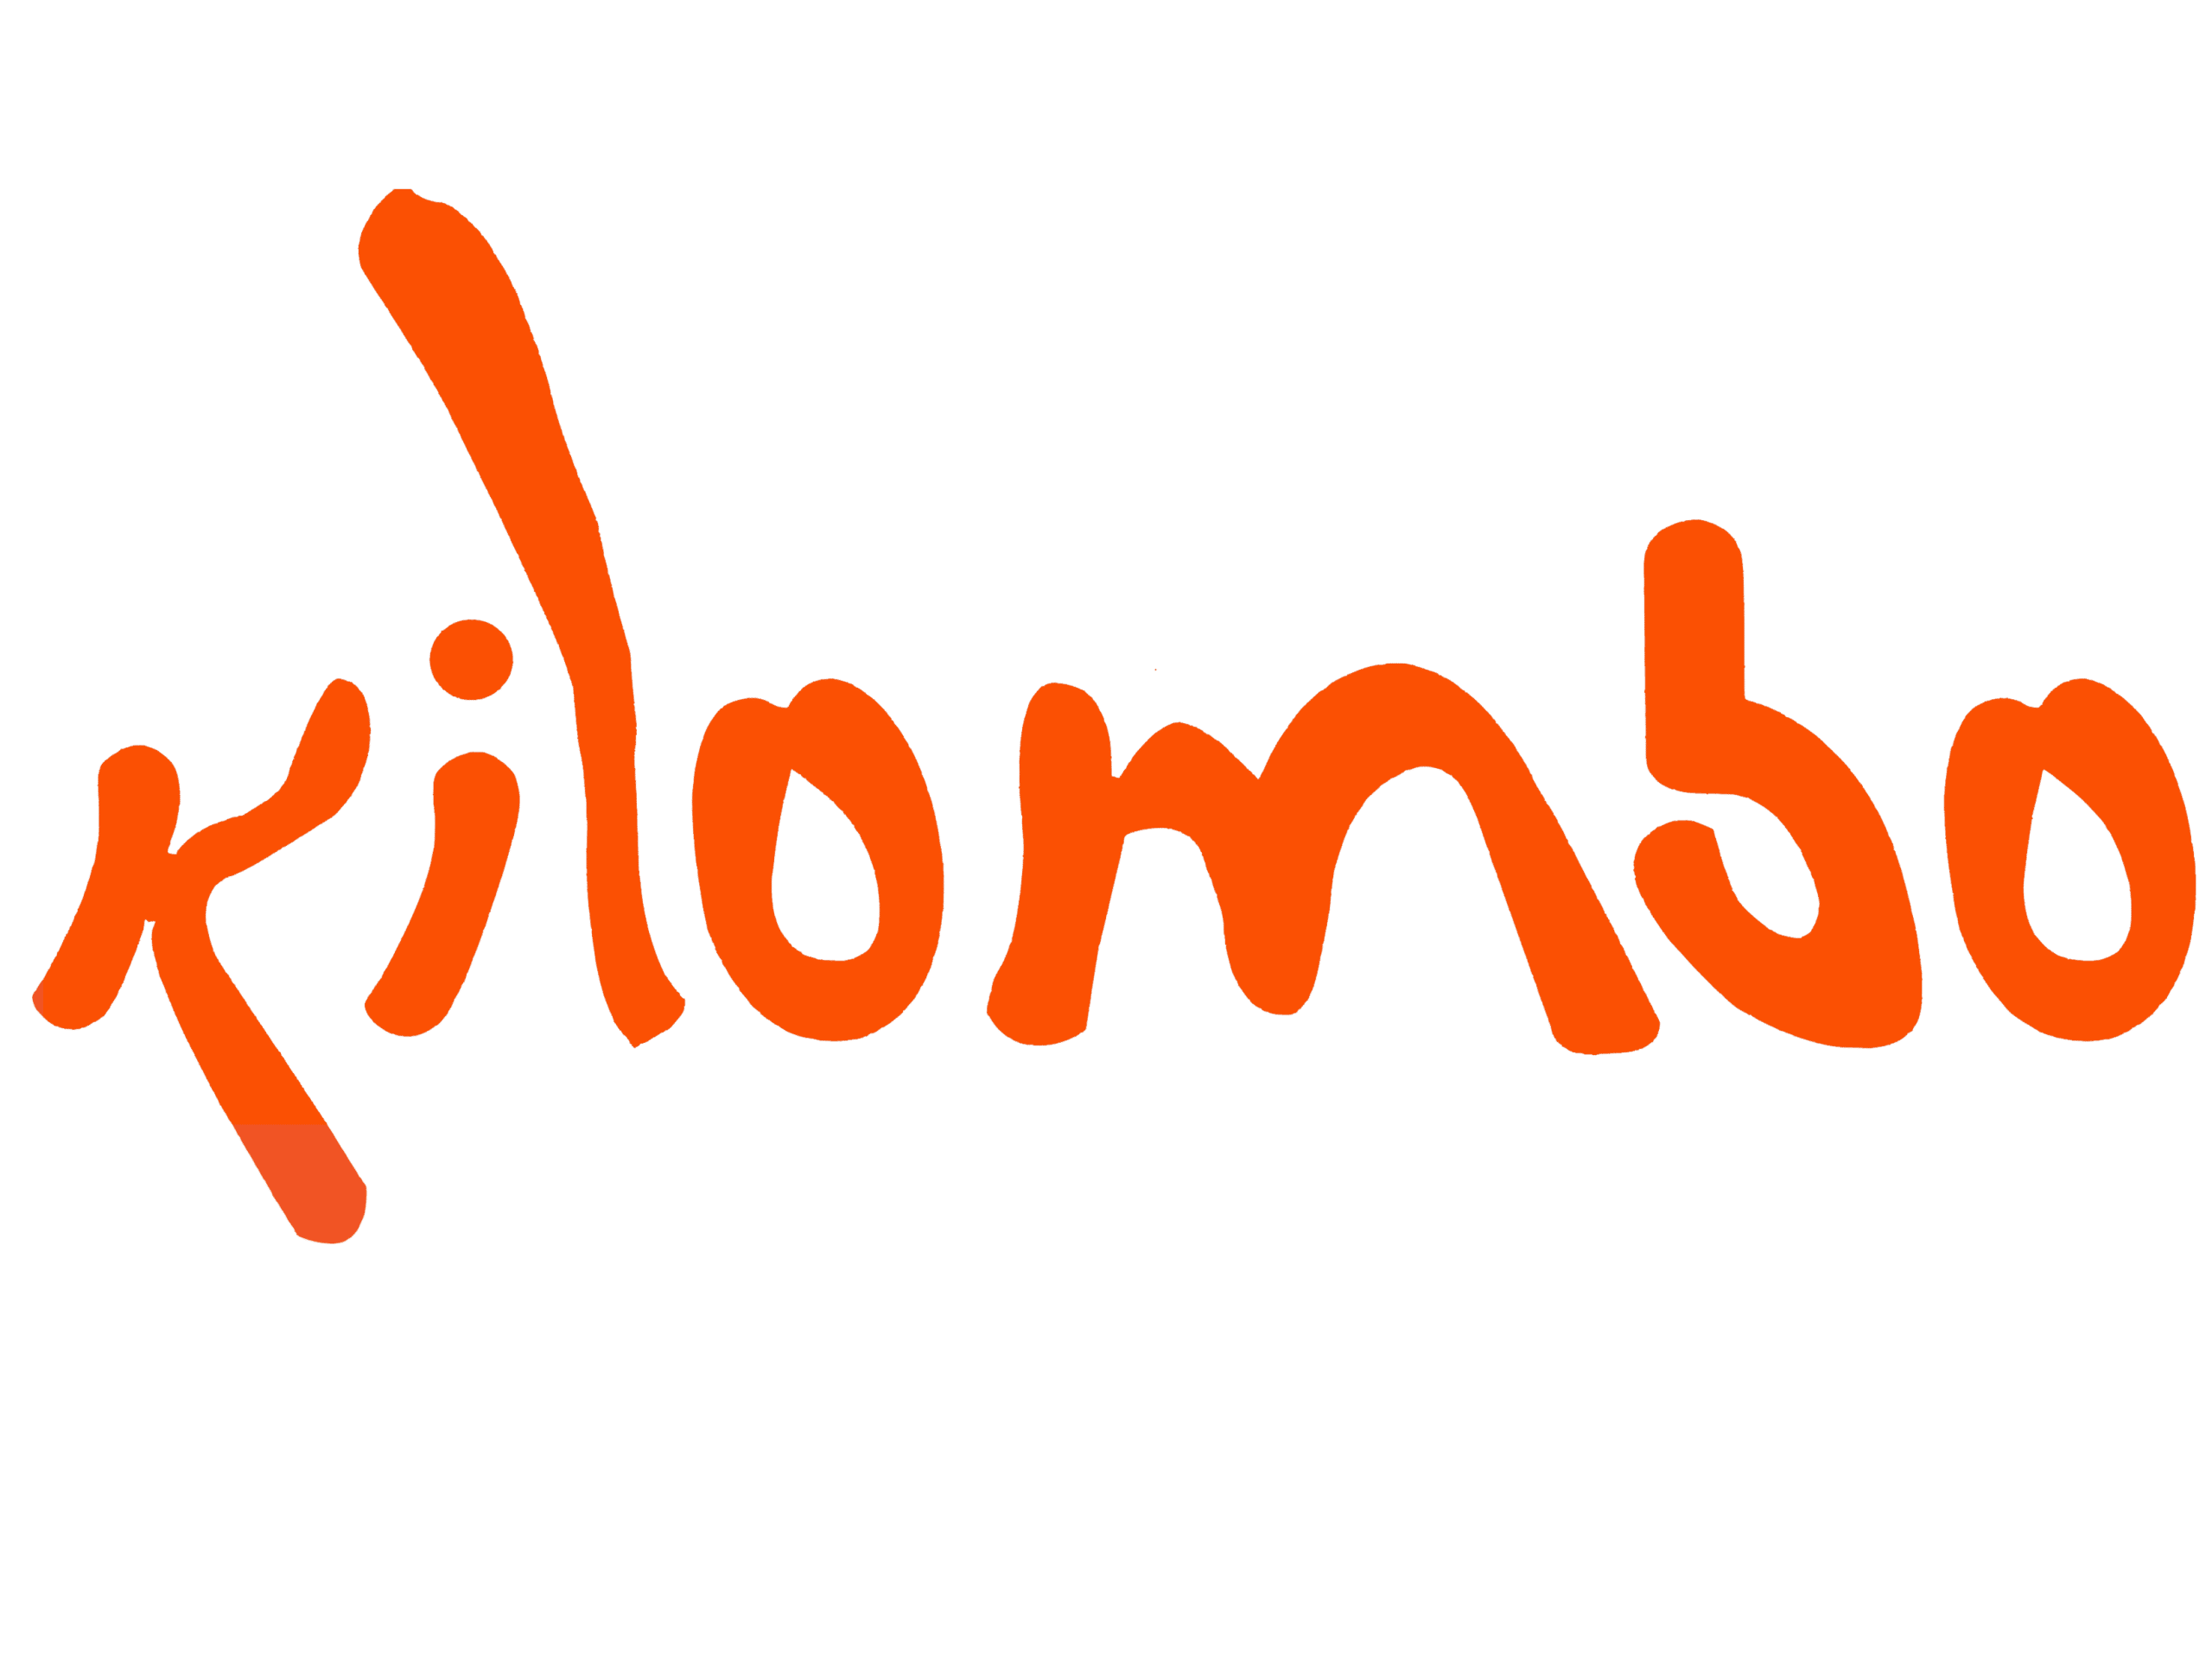 Kilombo, הטבות לסטודנטים ובוגרים ברשת חנויות הציוד - מכללת BPM